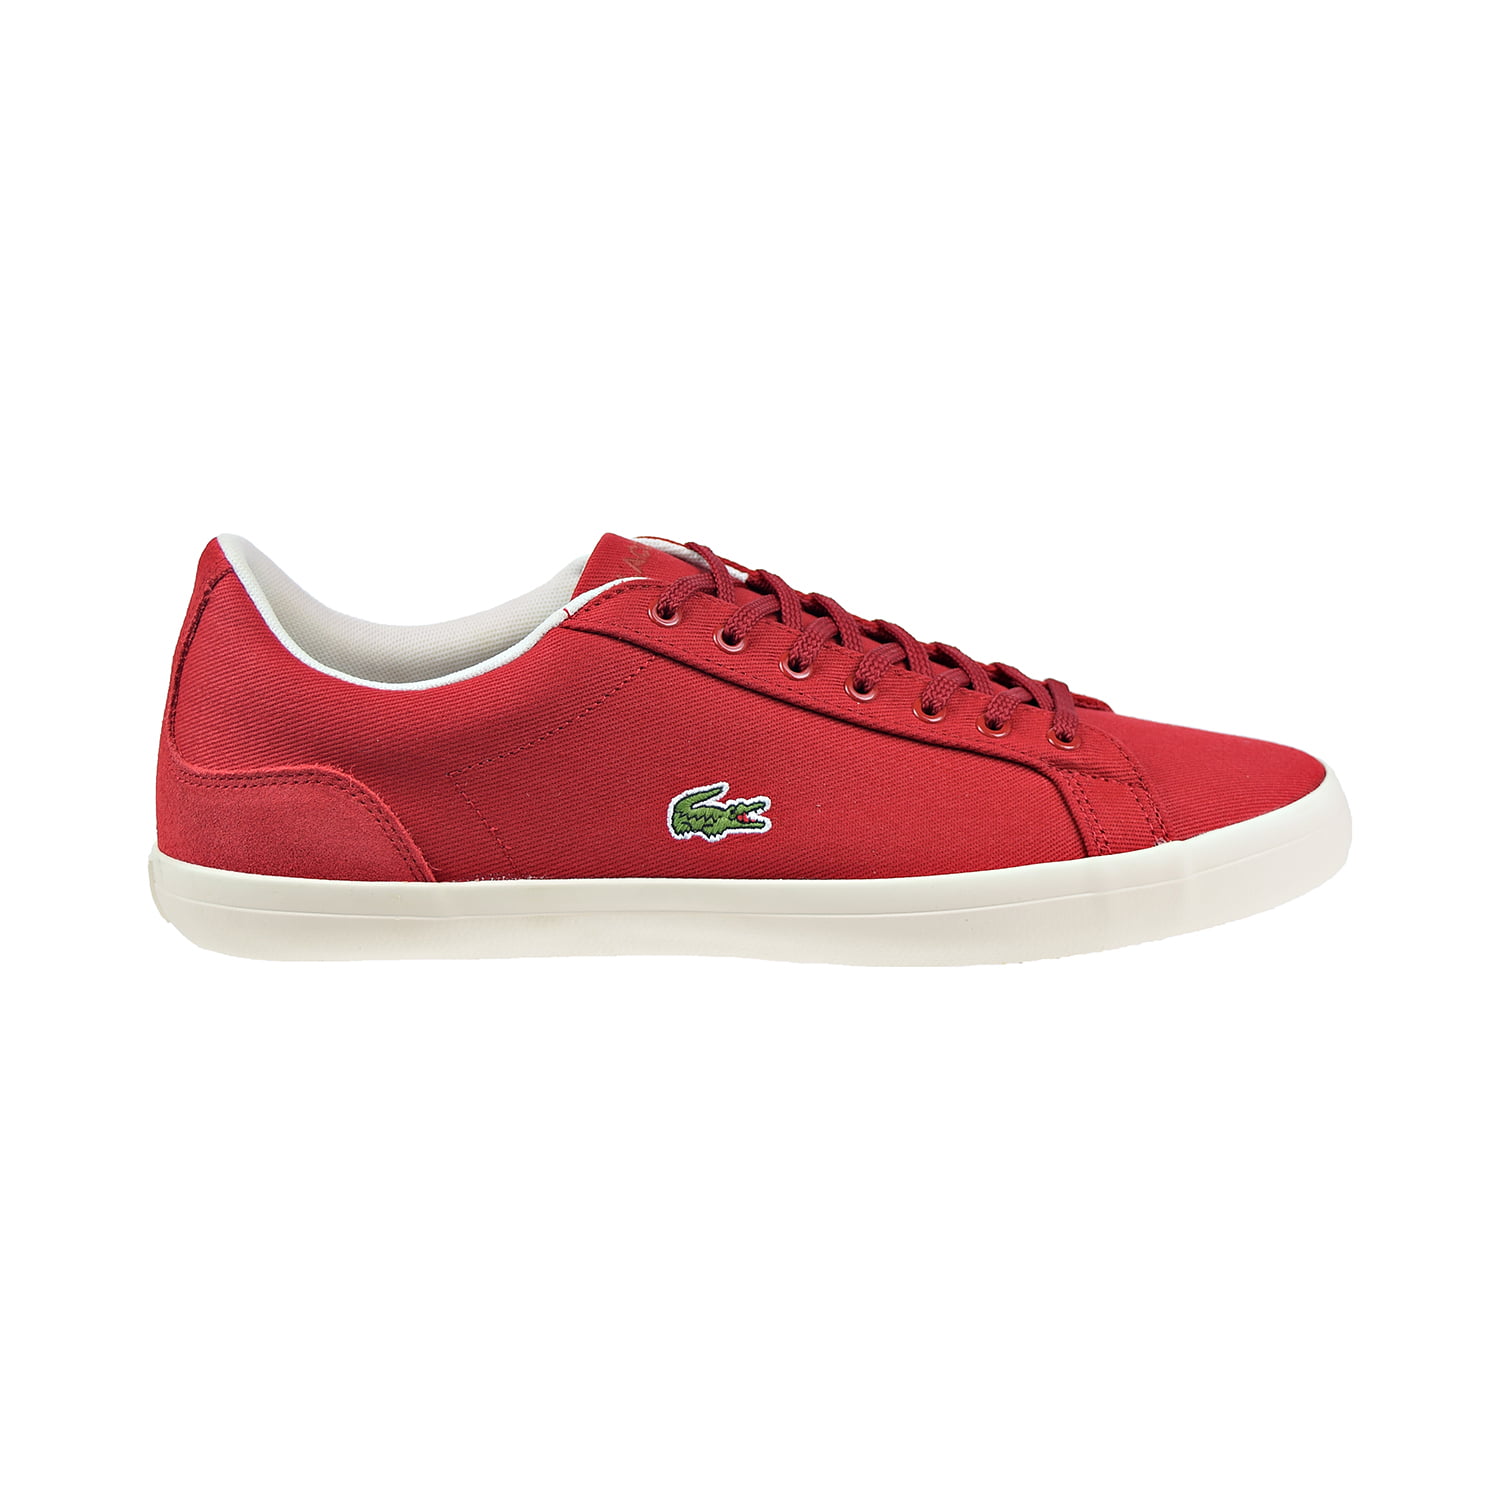 Lacoste Lerond 219 1 CMA Men's Shoes Red/Off 7-37cma0047-262 - Walmart.com